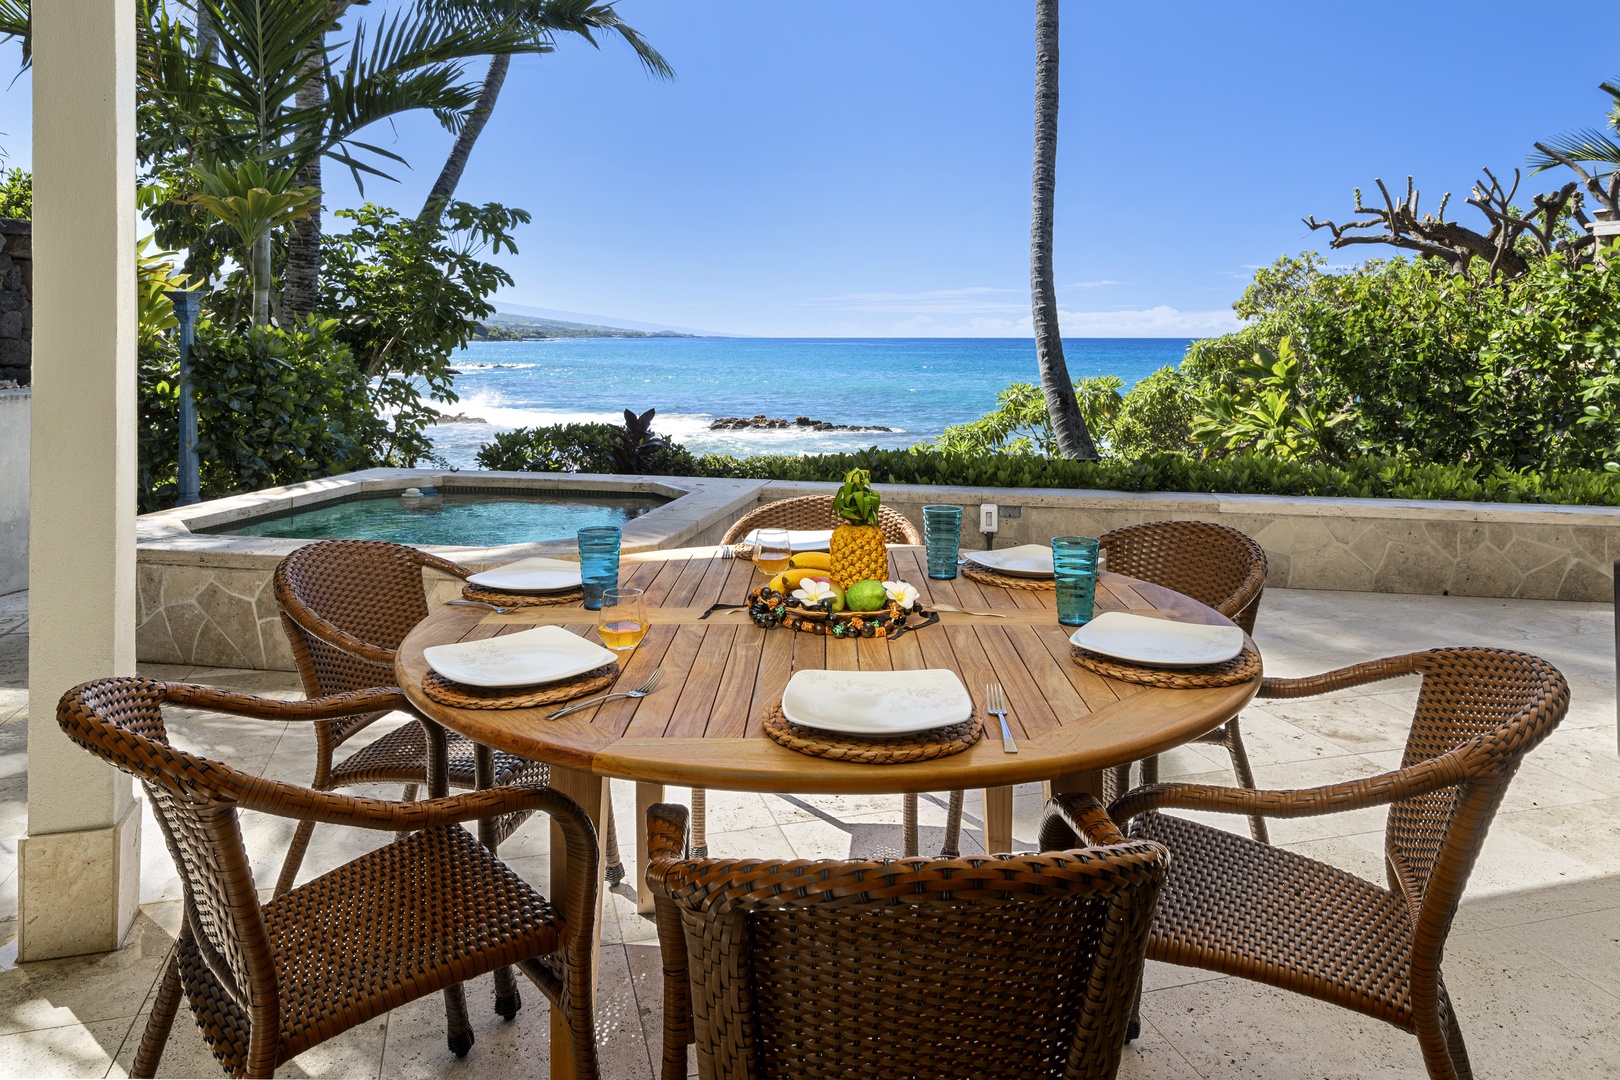 Kailua Kona Vacation Rentals, Ali'i Point #7 - Enjoy good company and sunshine at the outdoor dining table